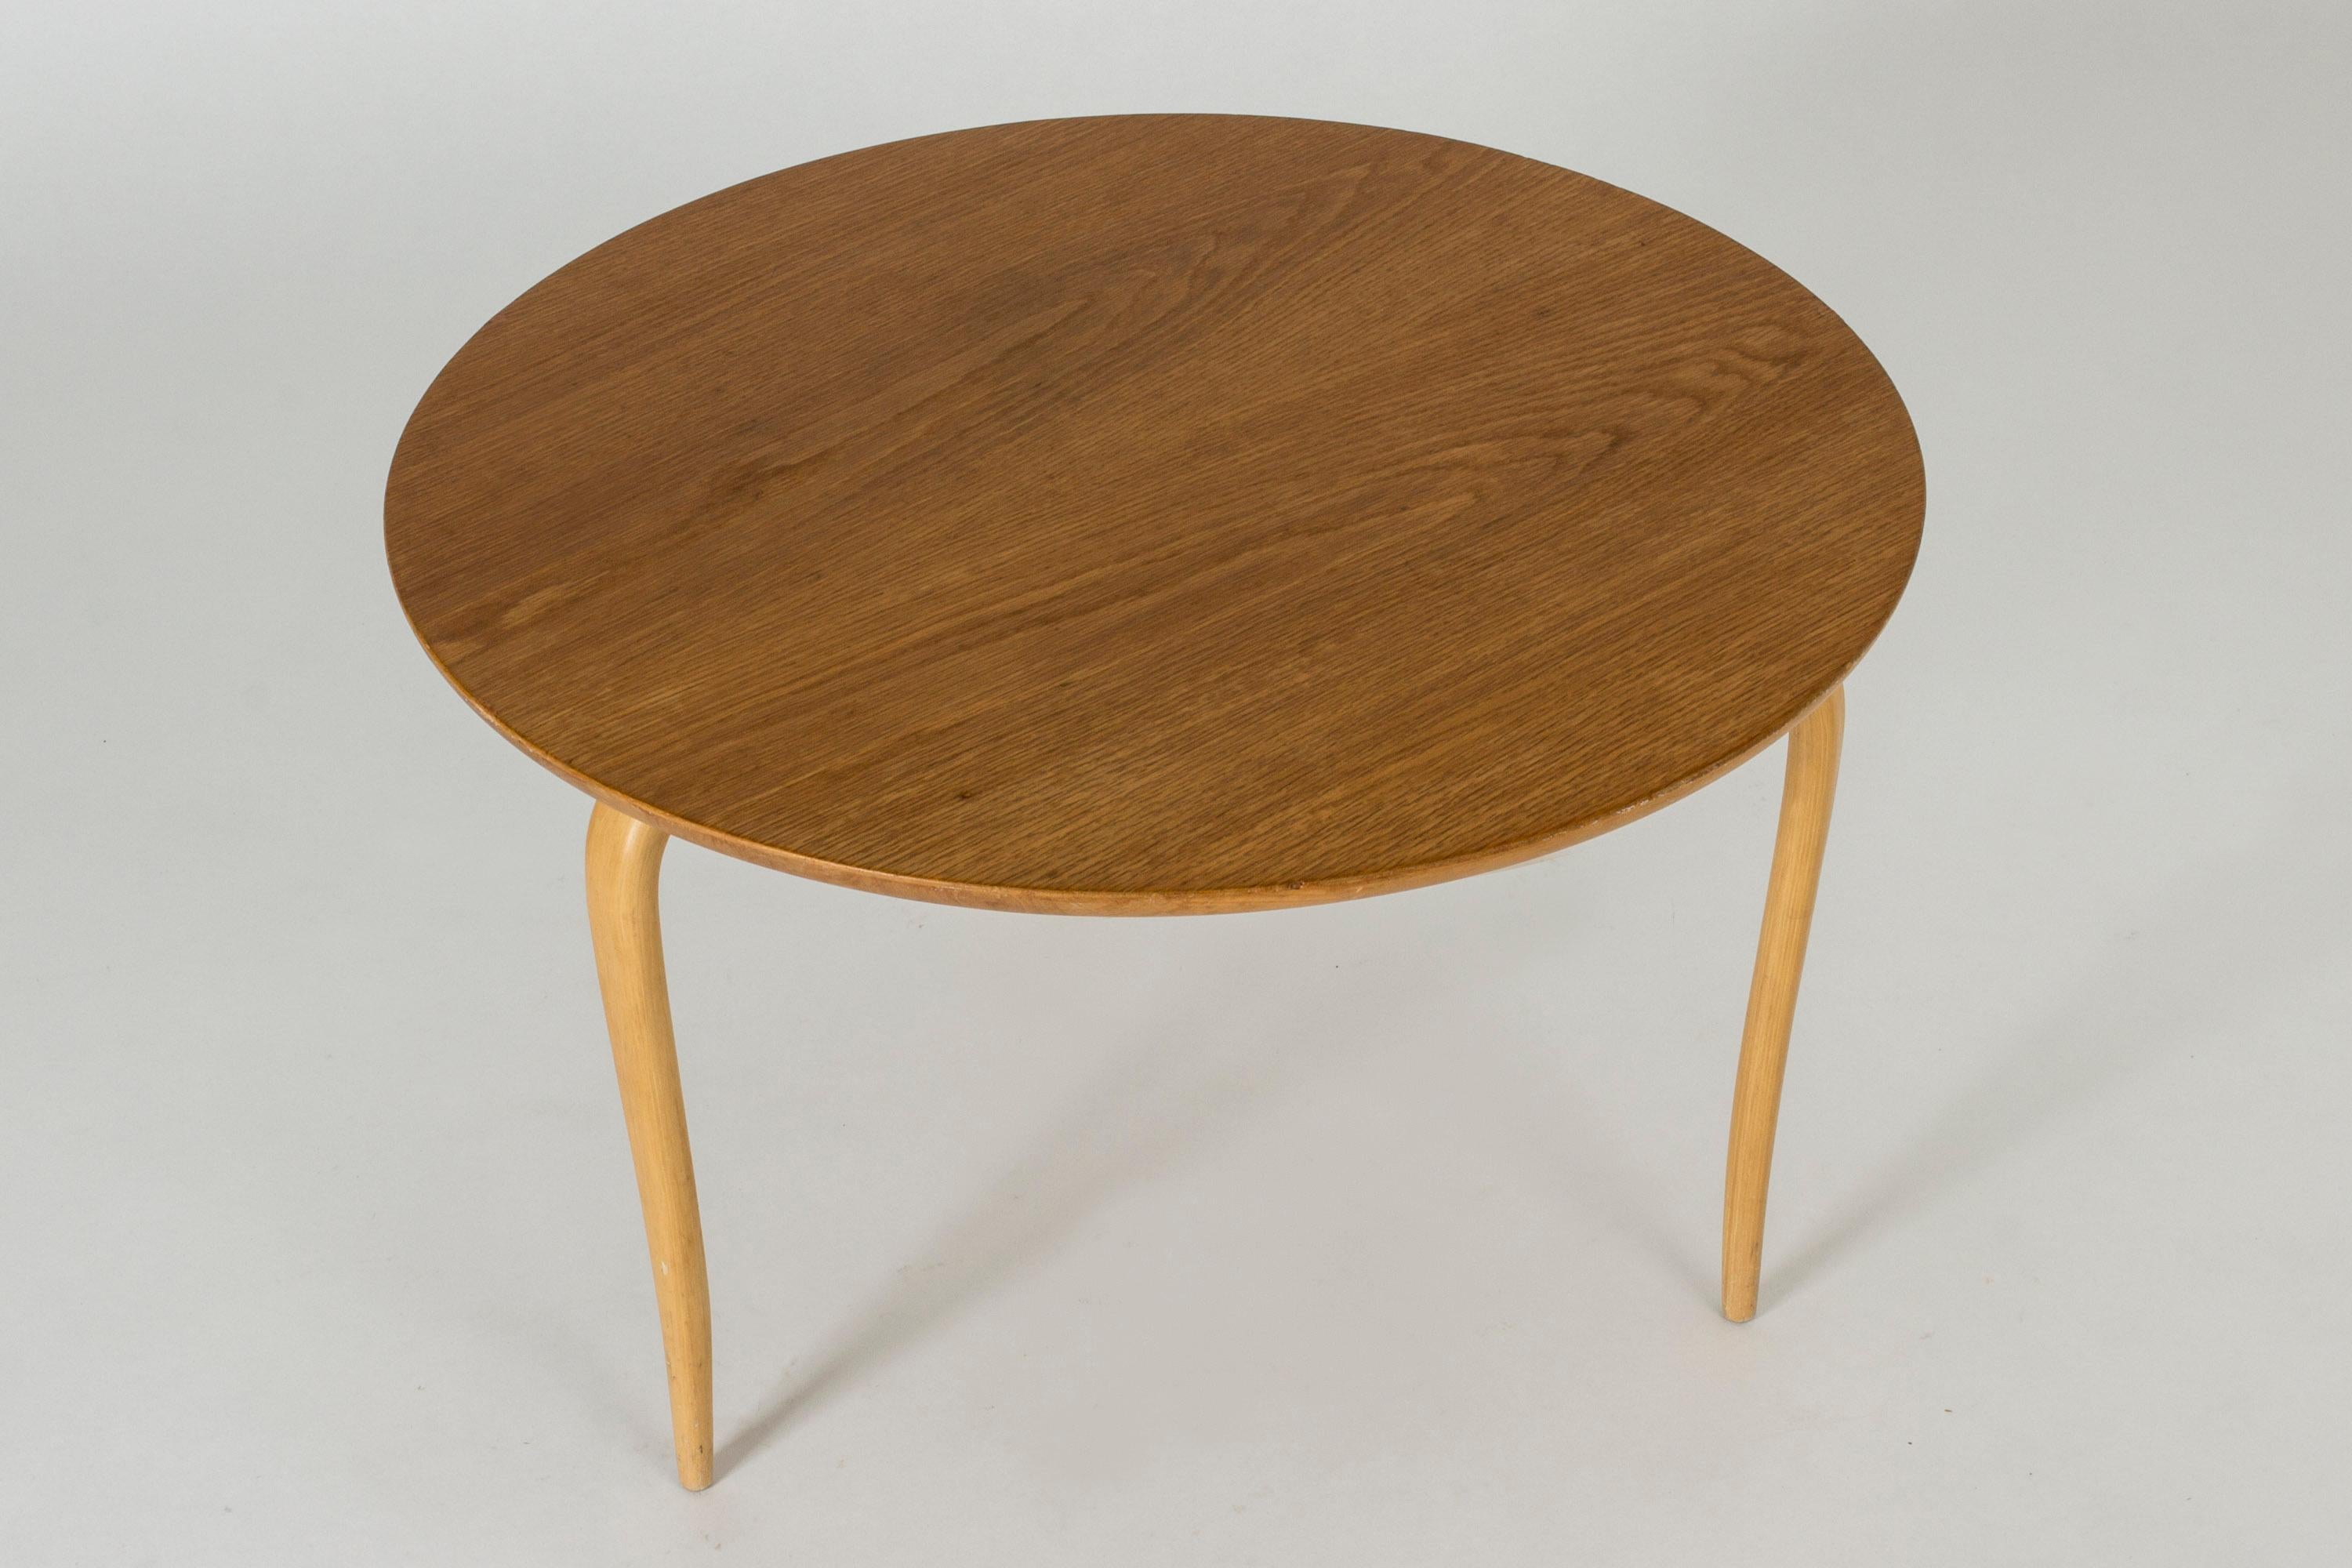 Scandinavian Modern “Annika” Side or Coffee Table by Bruno Mathsson